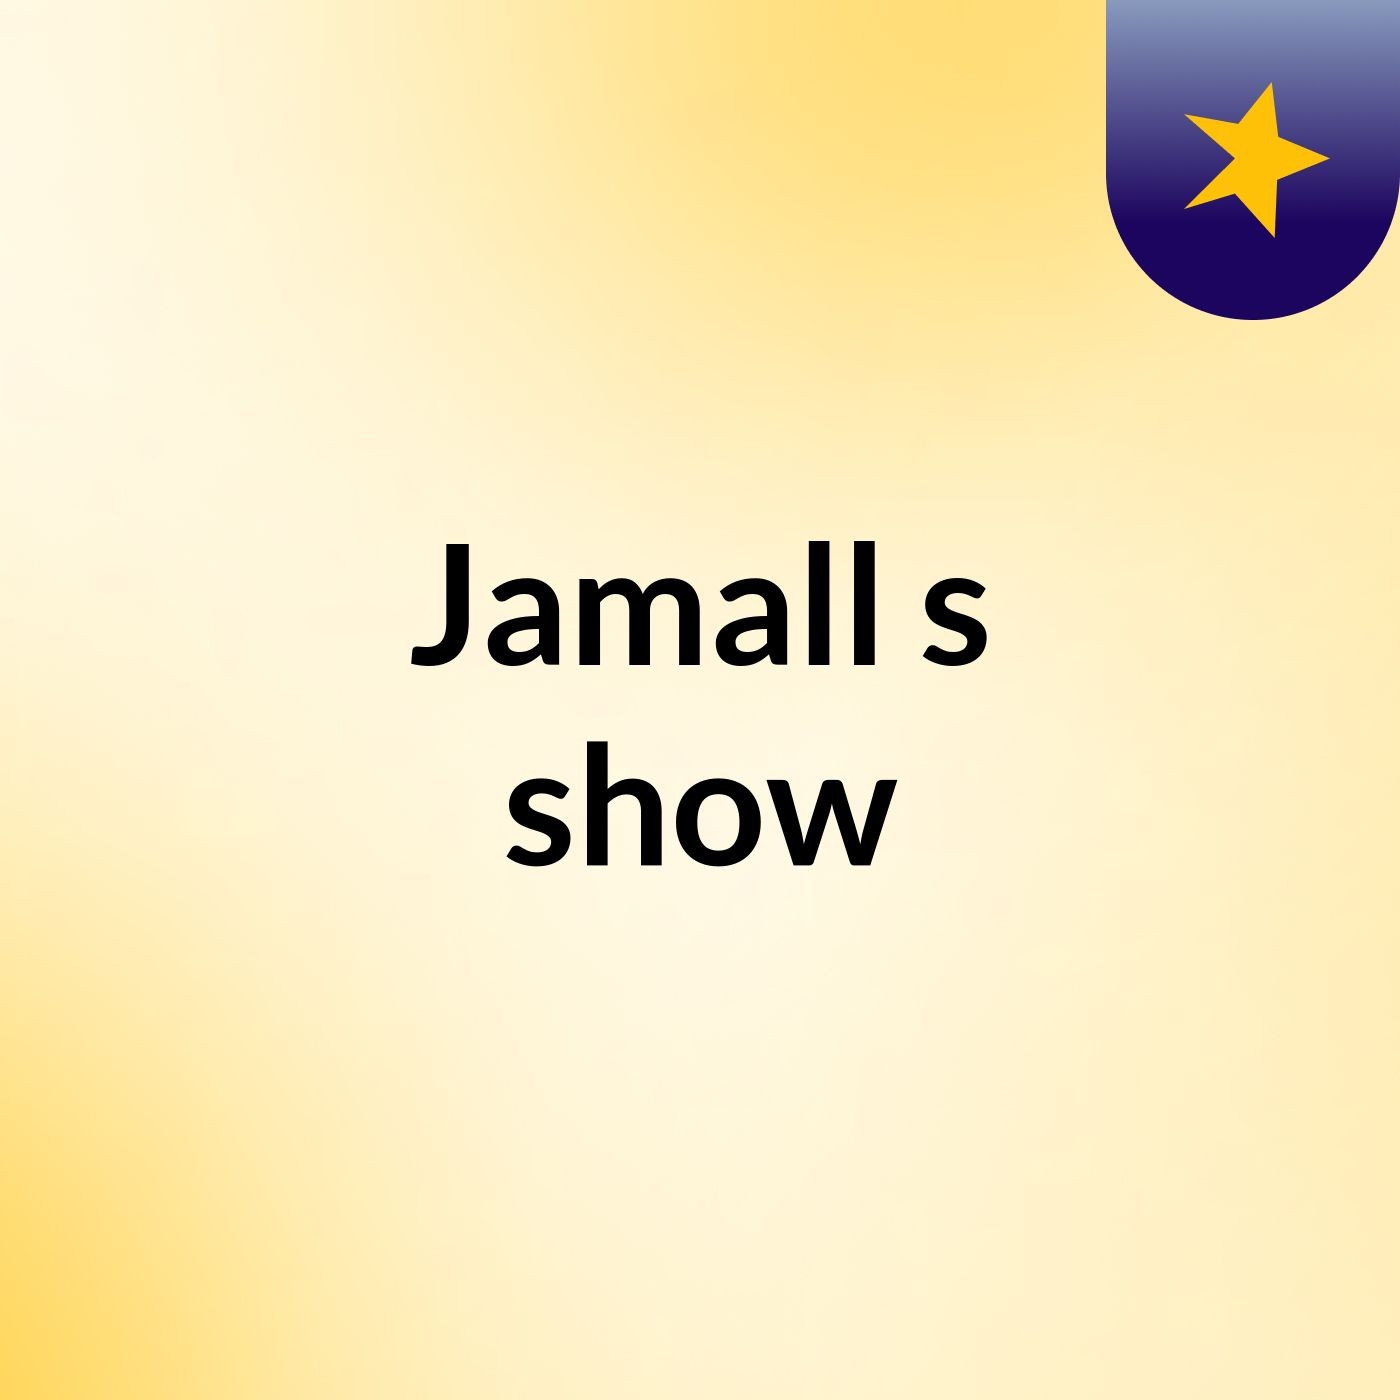 Jamall's show